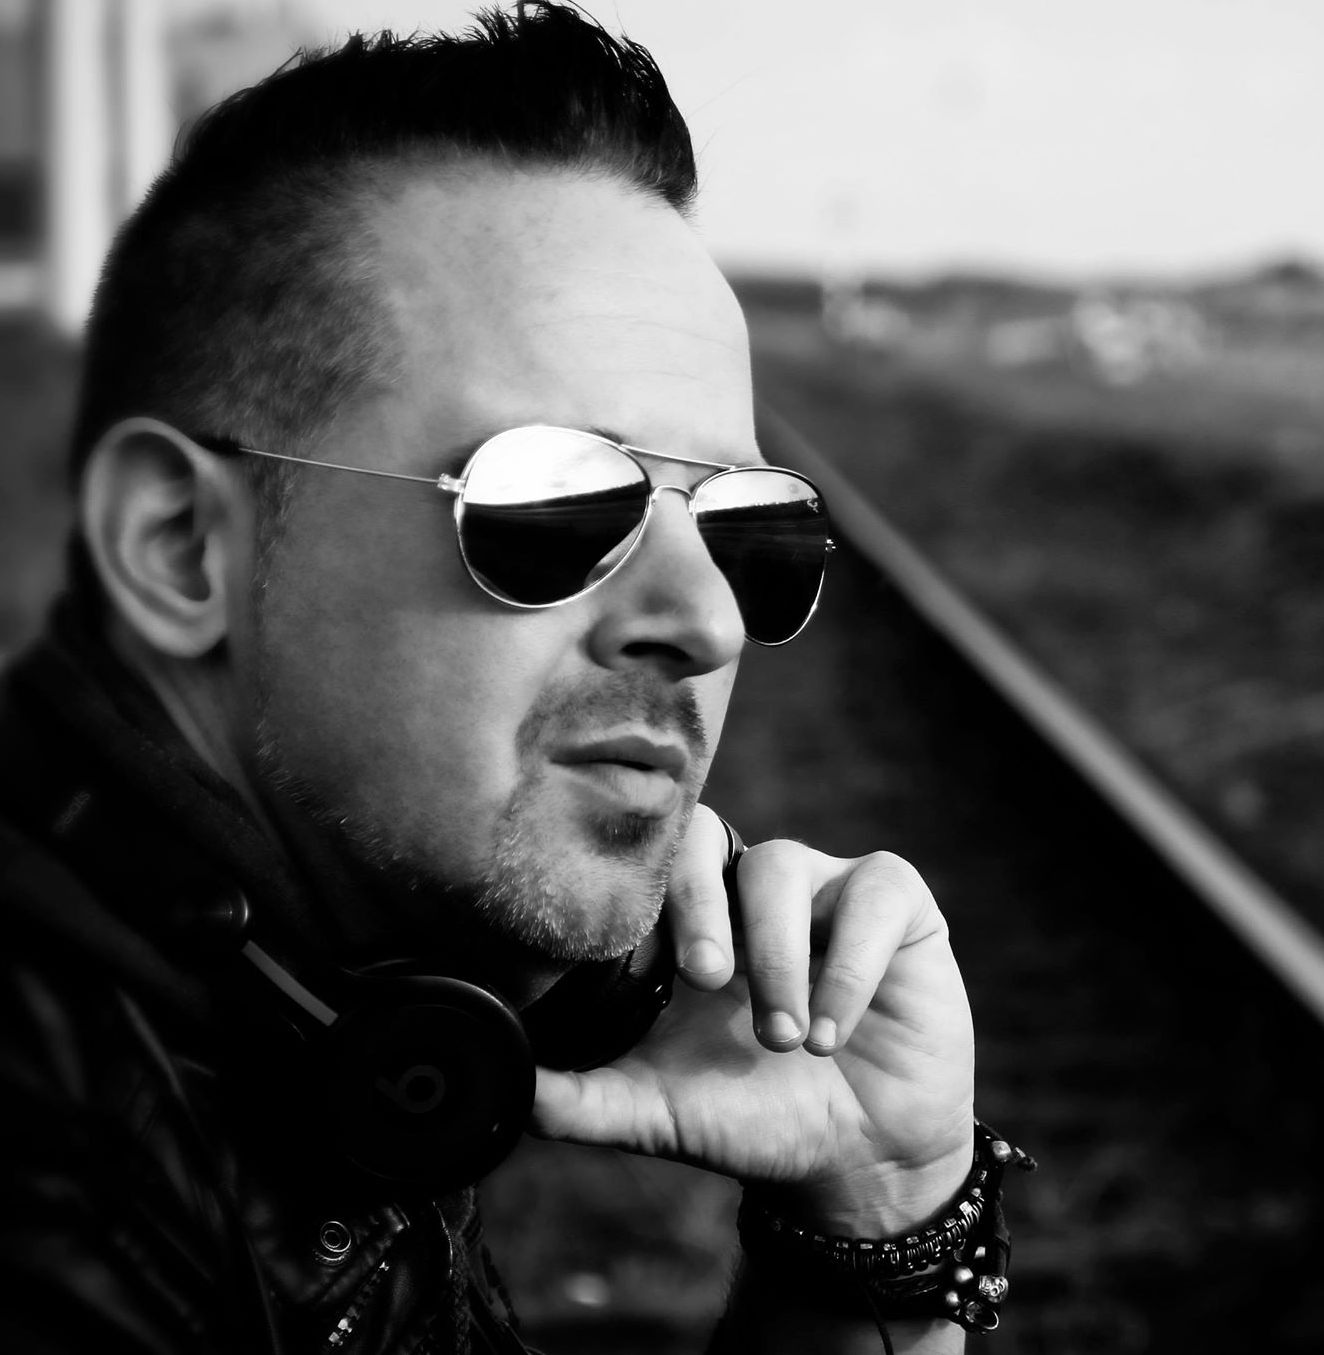 Dominique 'DJ Nick' Pinel